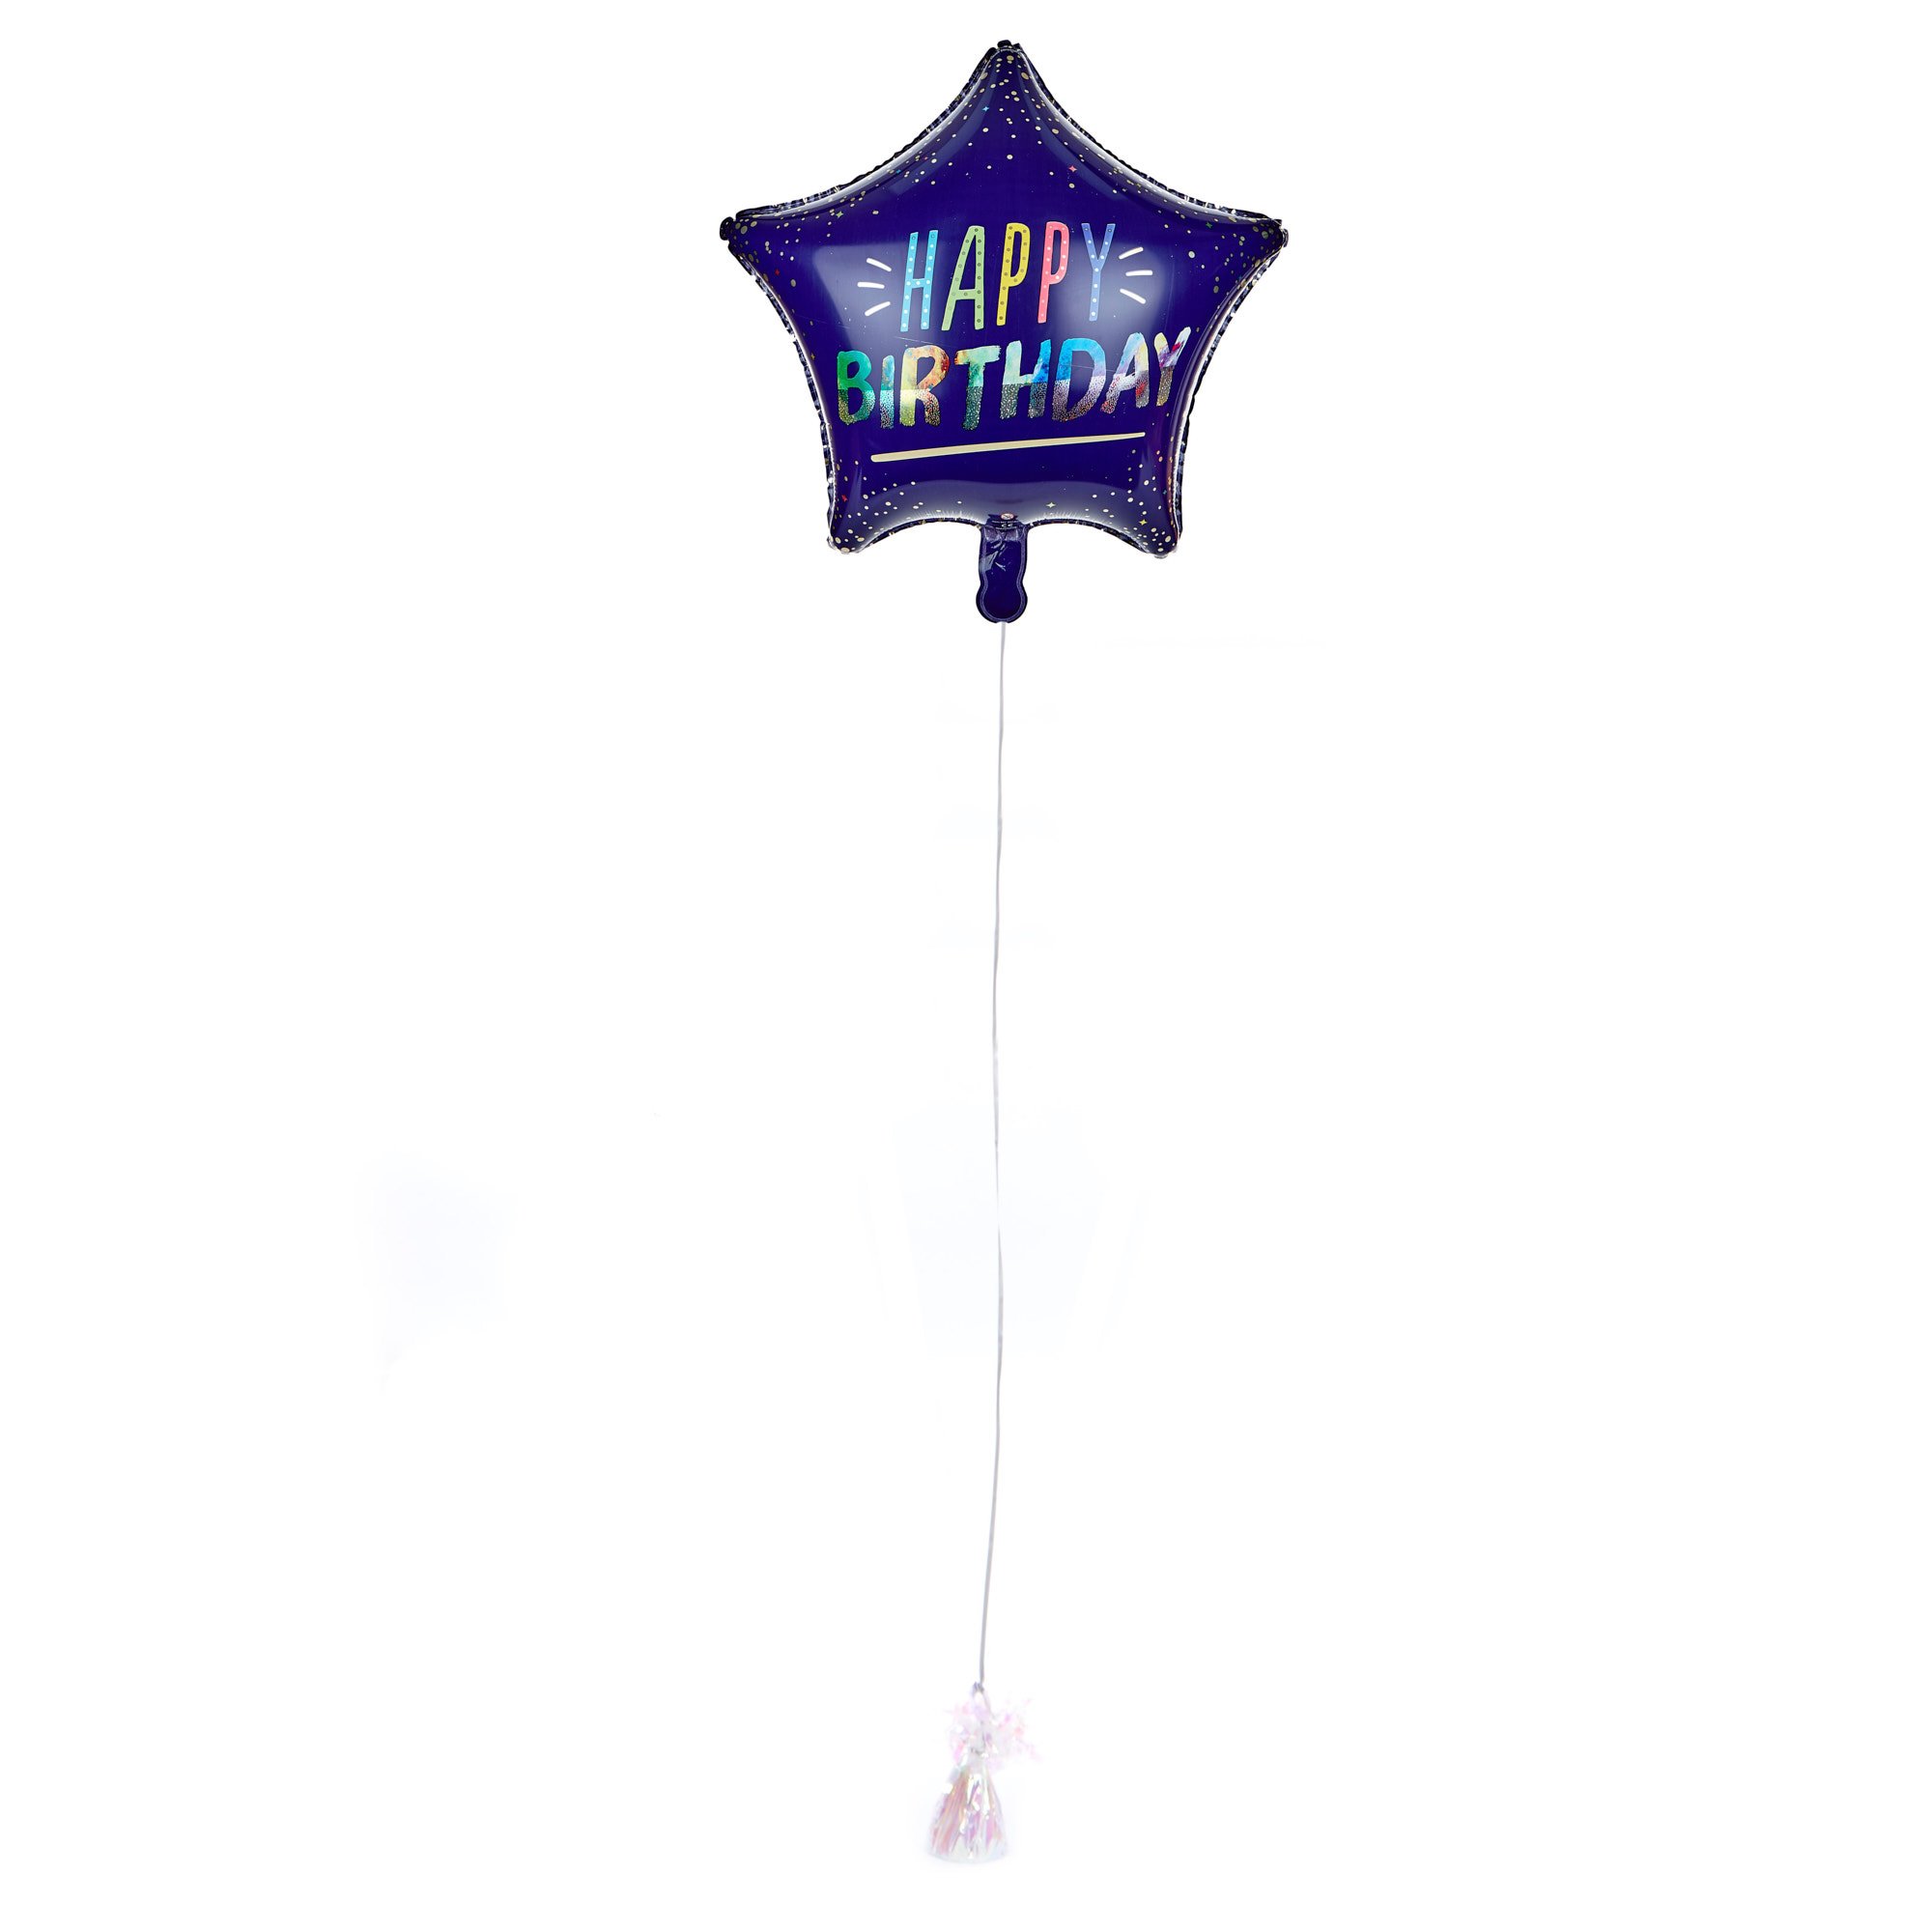 Blue Star Happy Birthday Balloon & Lindt Chocolates - FREE GIFT CARD!